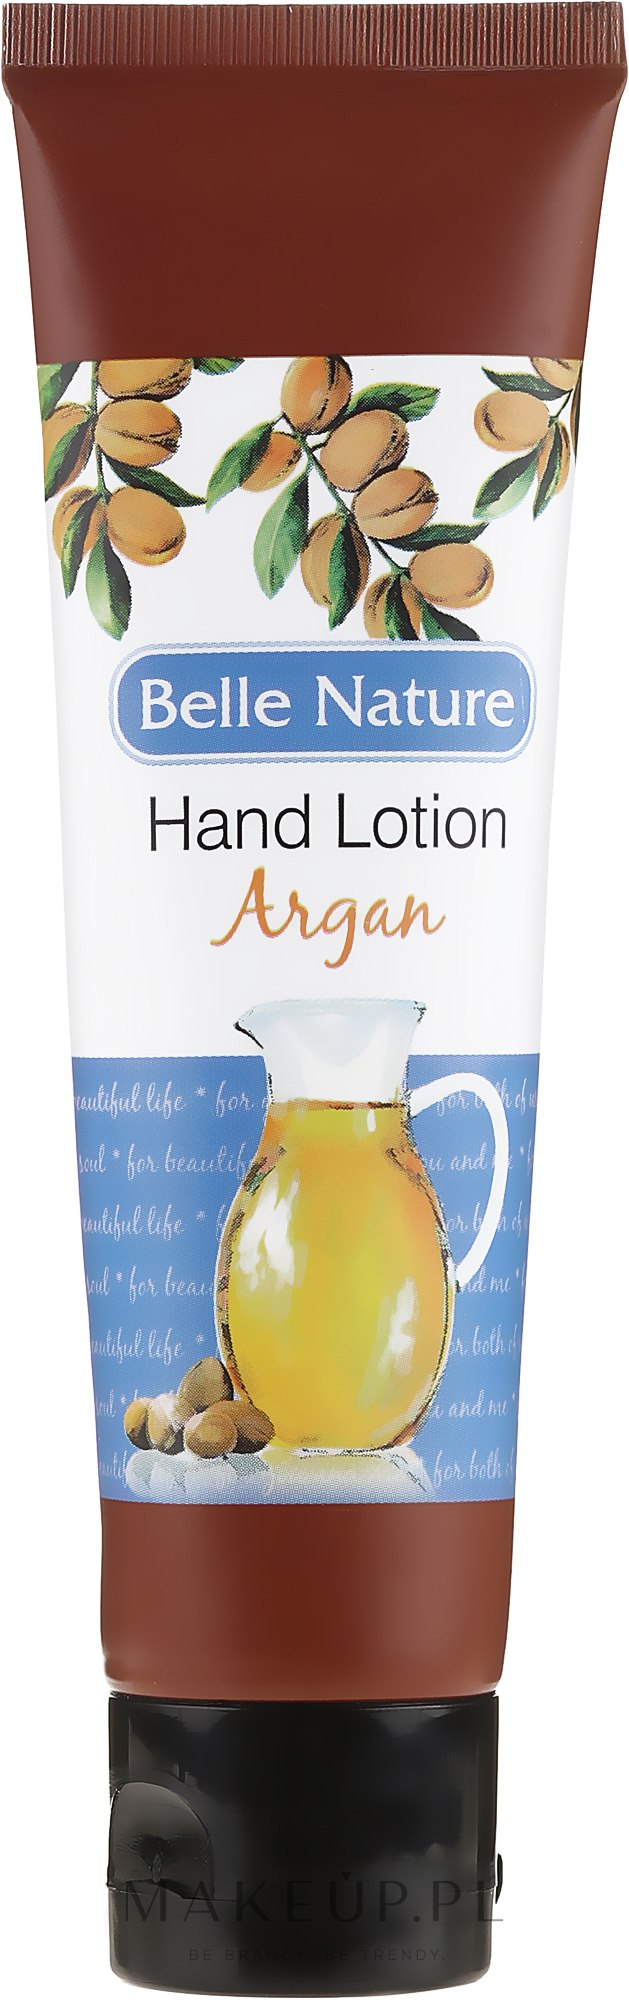 Balsam-krem do rąk o zapachu arganu - Belle Nature Hand Lotion Argan — Zdjęcie 60 ml